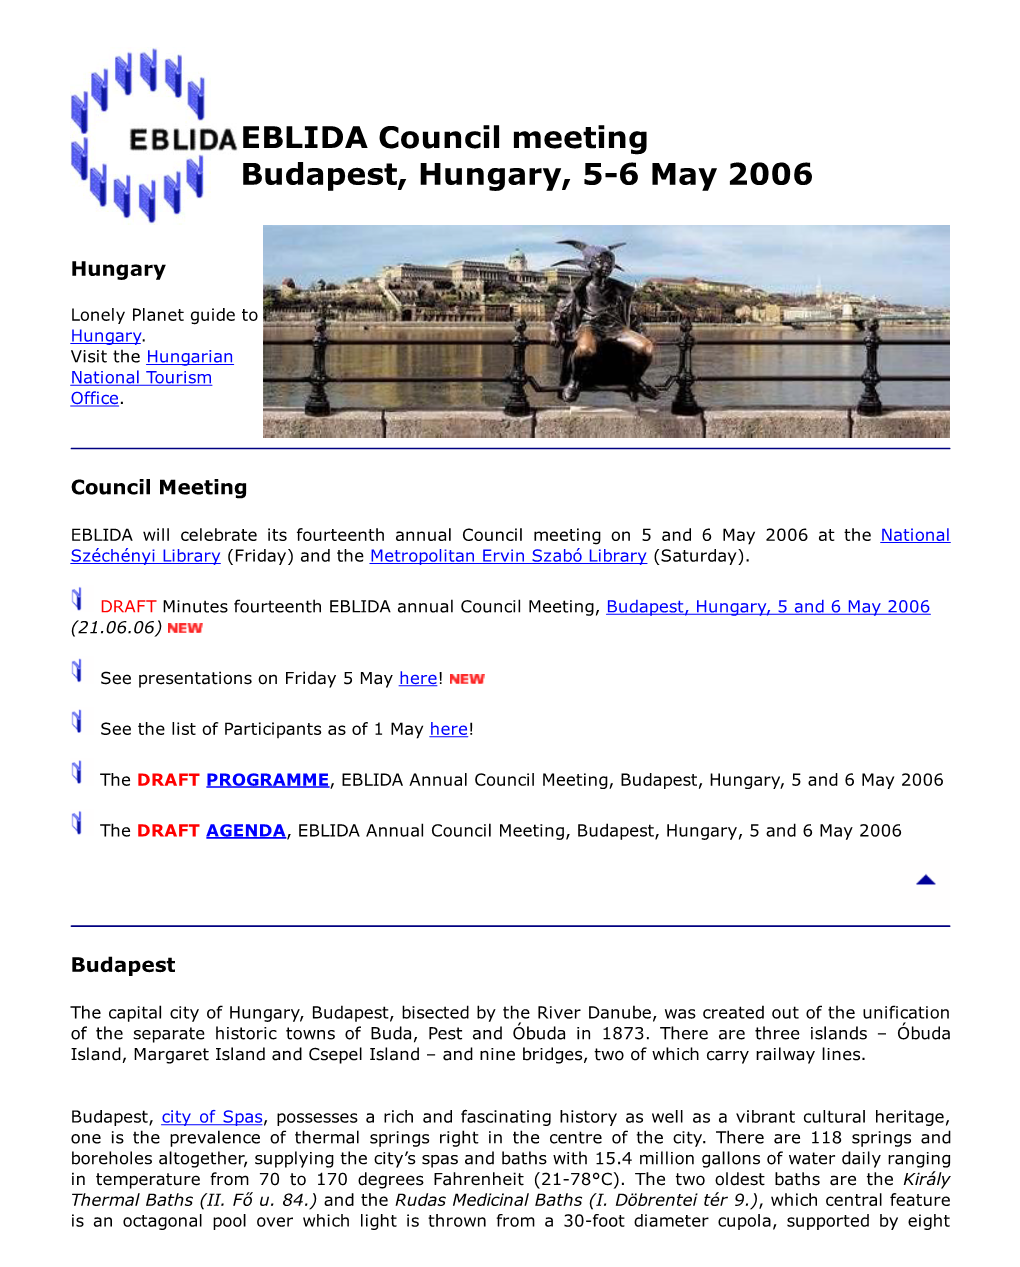 EBLIDA Council Meeting, Budapest, Hungary, 5-6 May 2006